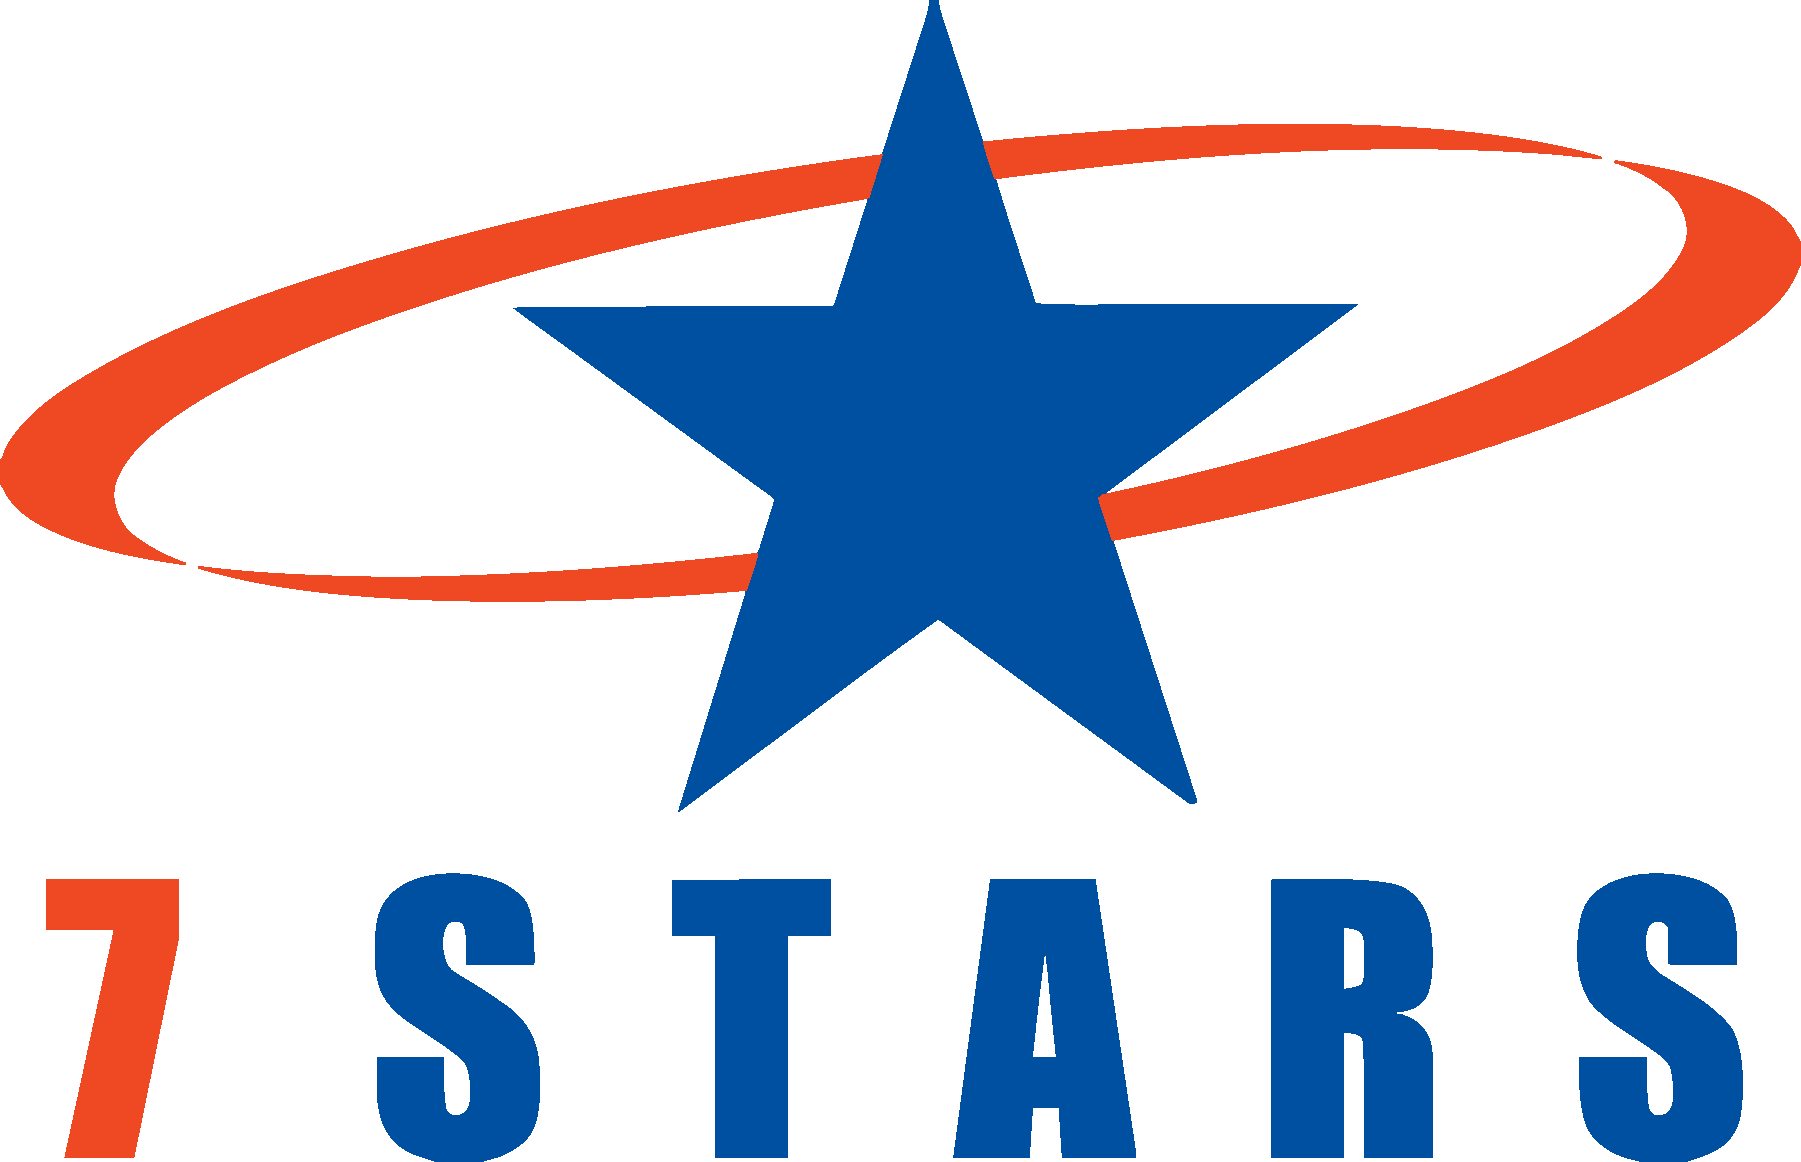 Eagle & Star Logo (American Theme) by Wasi Rahman on Dribbble